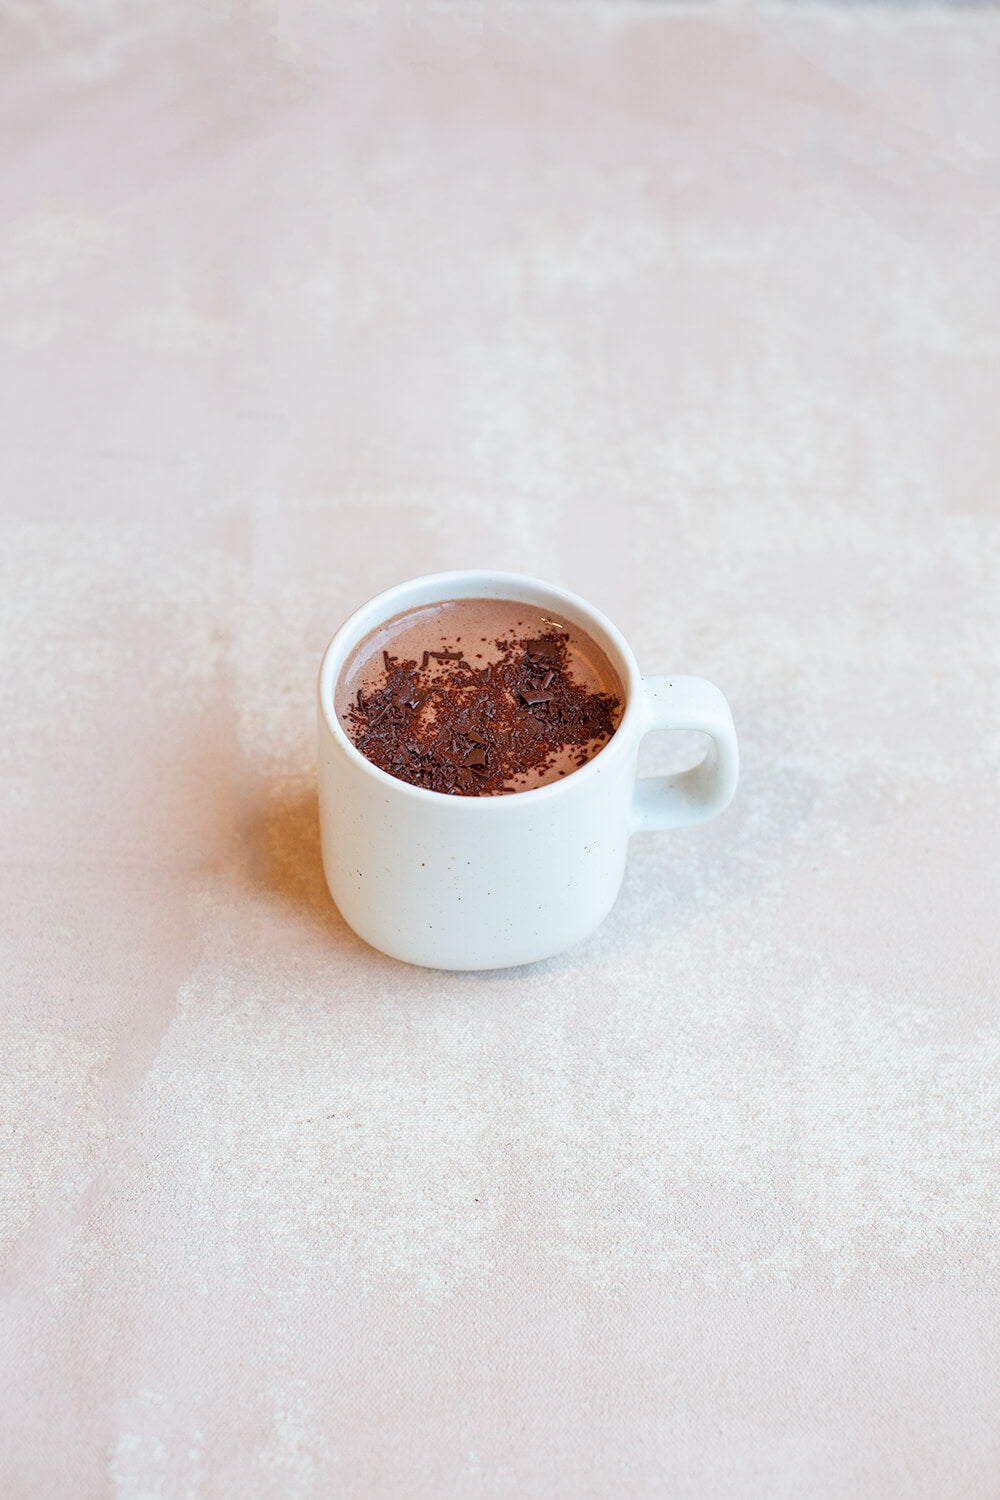 68% Dominican Republic Salted Hot Chocolate - Vegan | 250g | by Bare Bones - Lifestory